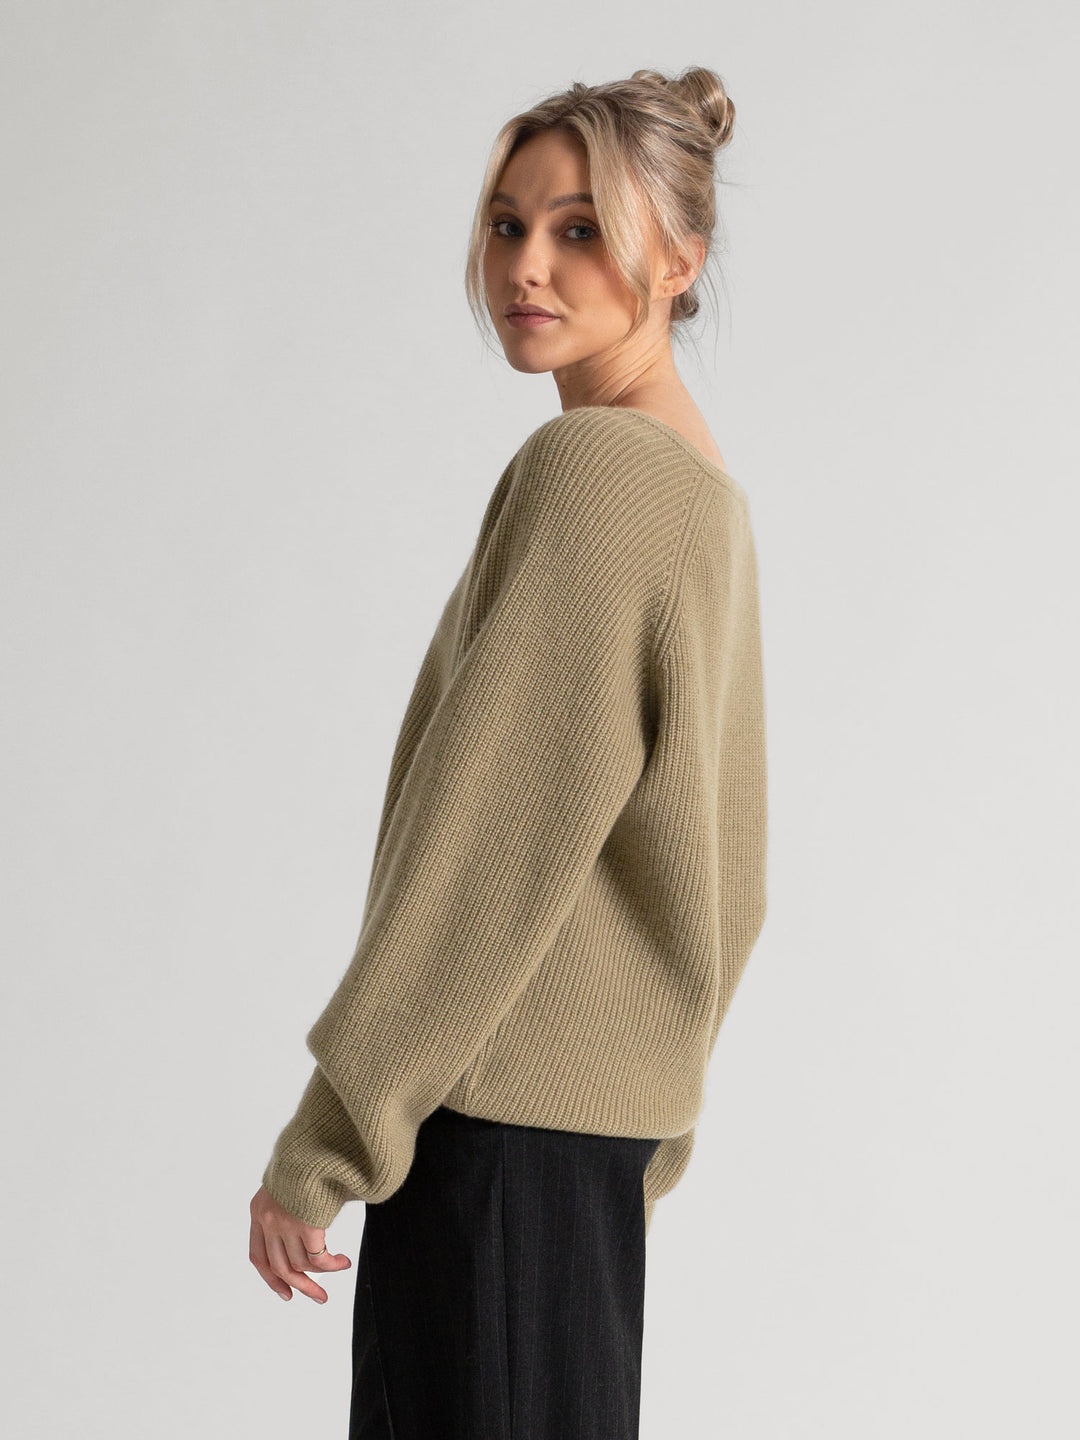 Rib knitted V-neck cashmere sweater in color: Olive. 100% cashmere, Scandinavian design by Kashmina.